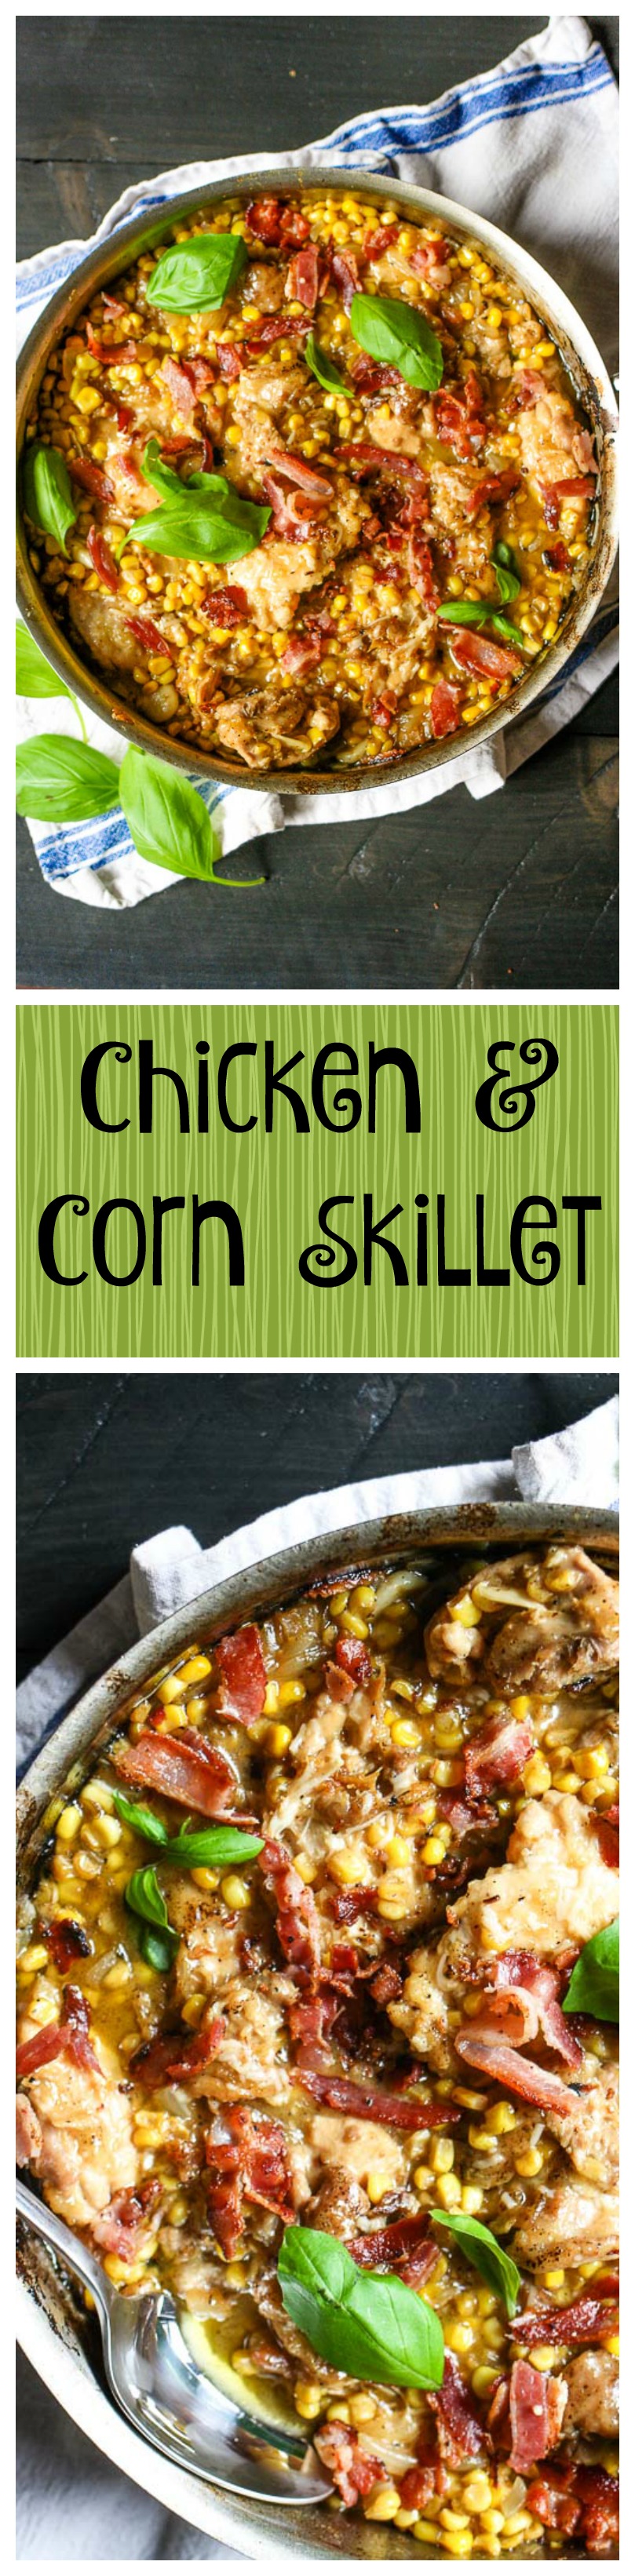 chicken and corn skillet